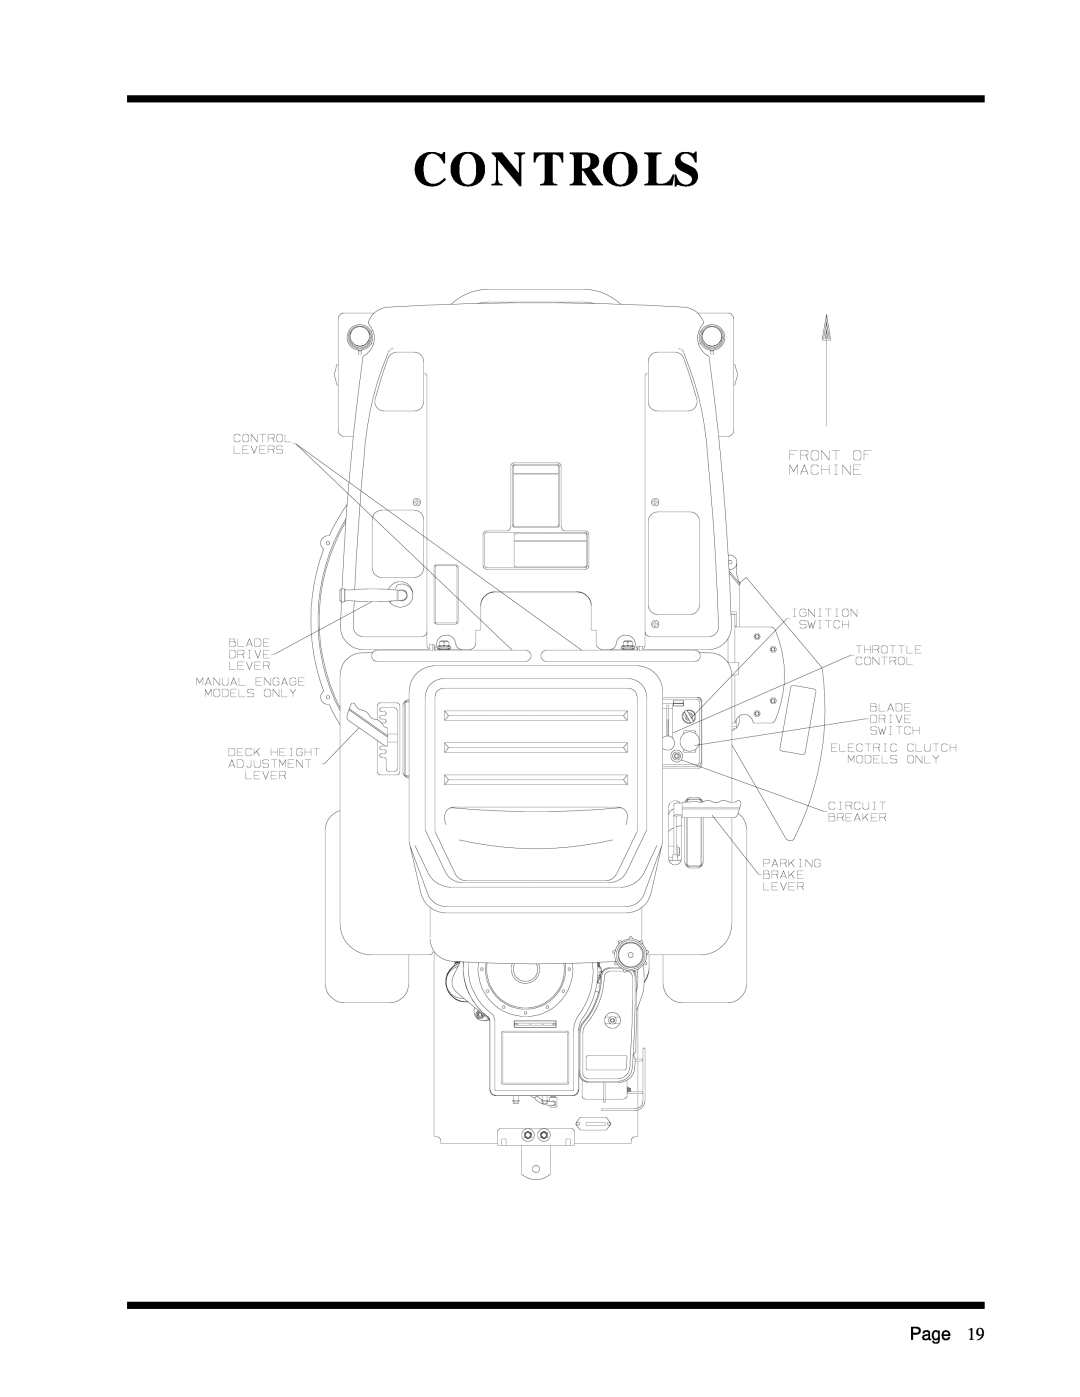 Dixon 6520-1099, ZTR 3303, ZTR 3304, 1855-0599 manual Controls, Page 